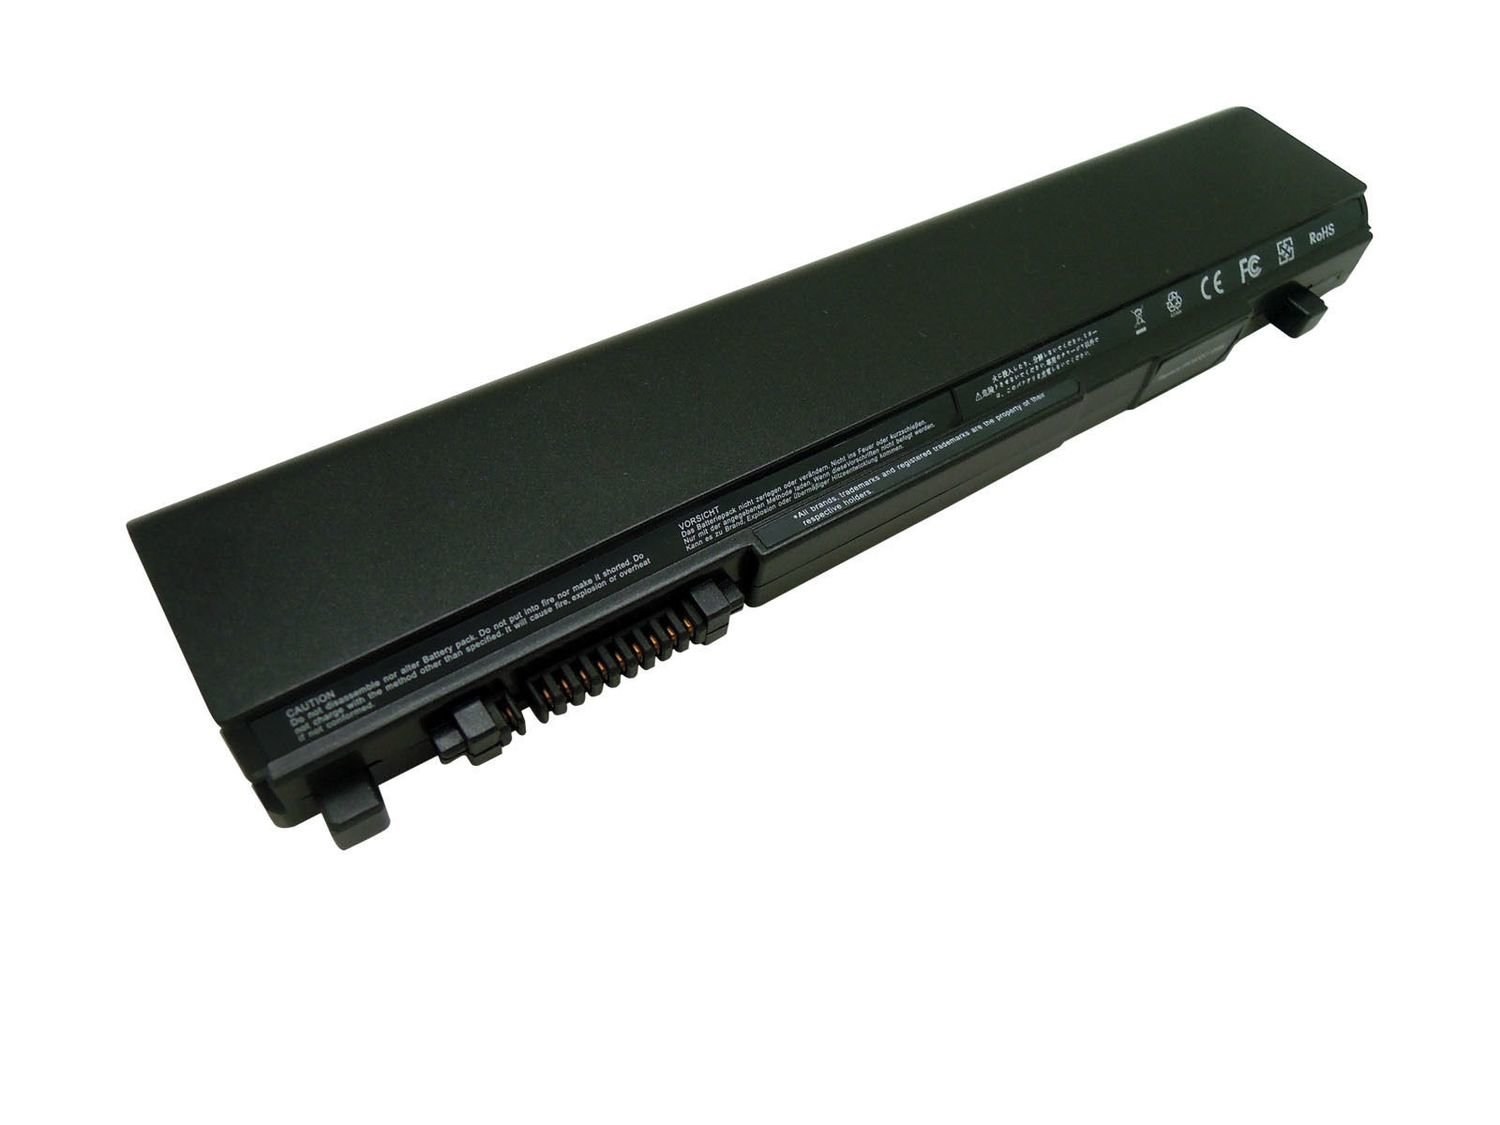 Toshiba portege R700 R731 R830 R835 R930 series Compatible laptop battery